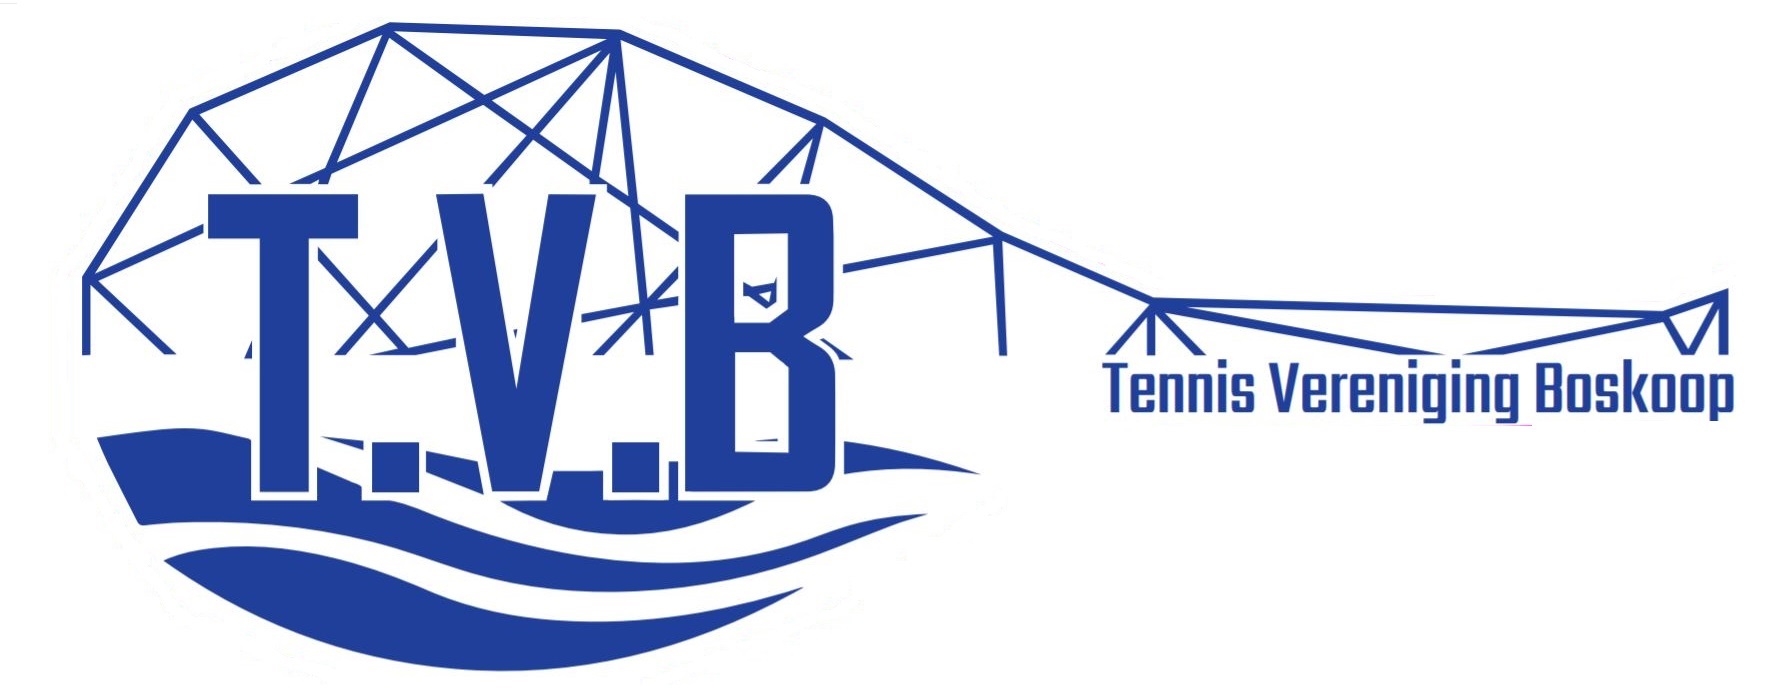 Profile image of venue Tennis Vereniging Boskoop